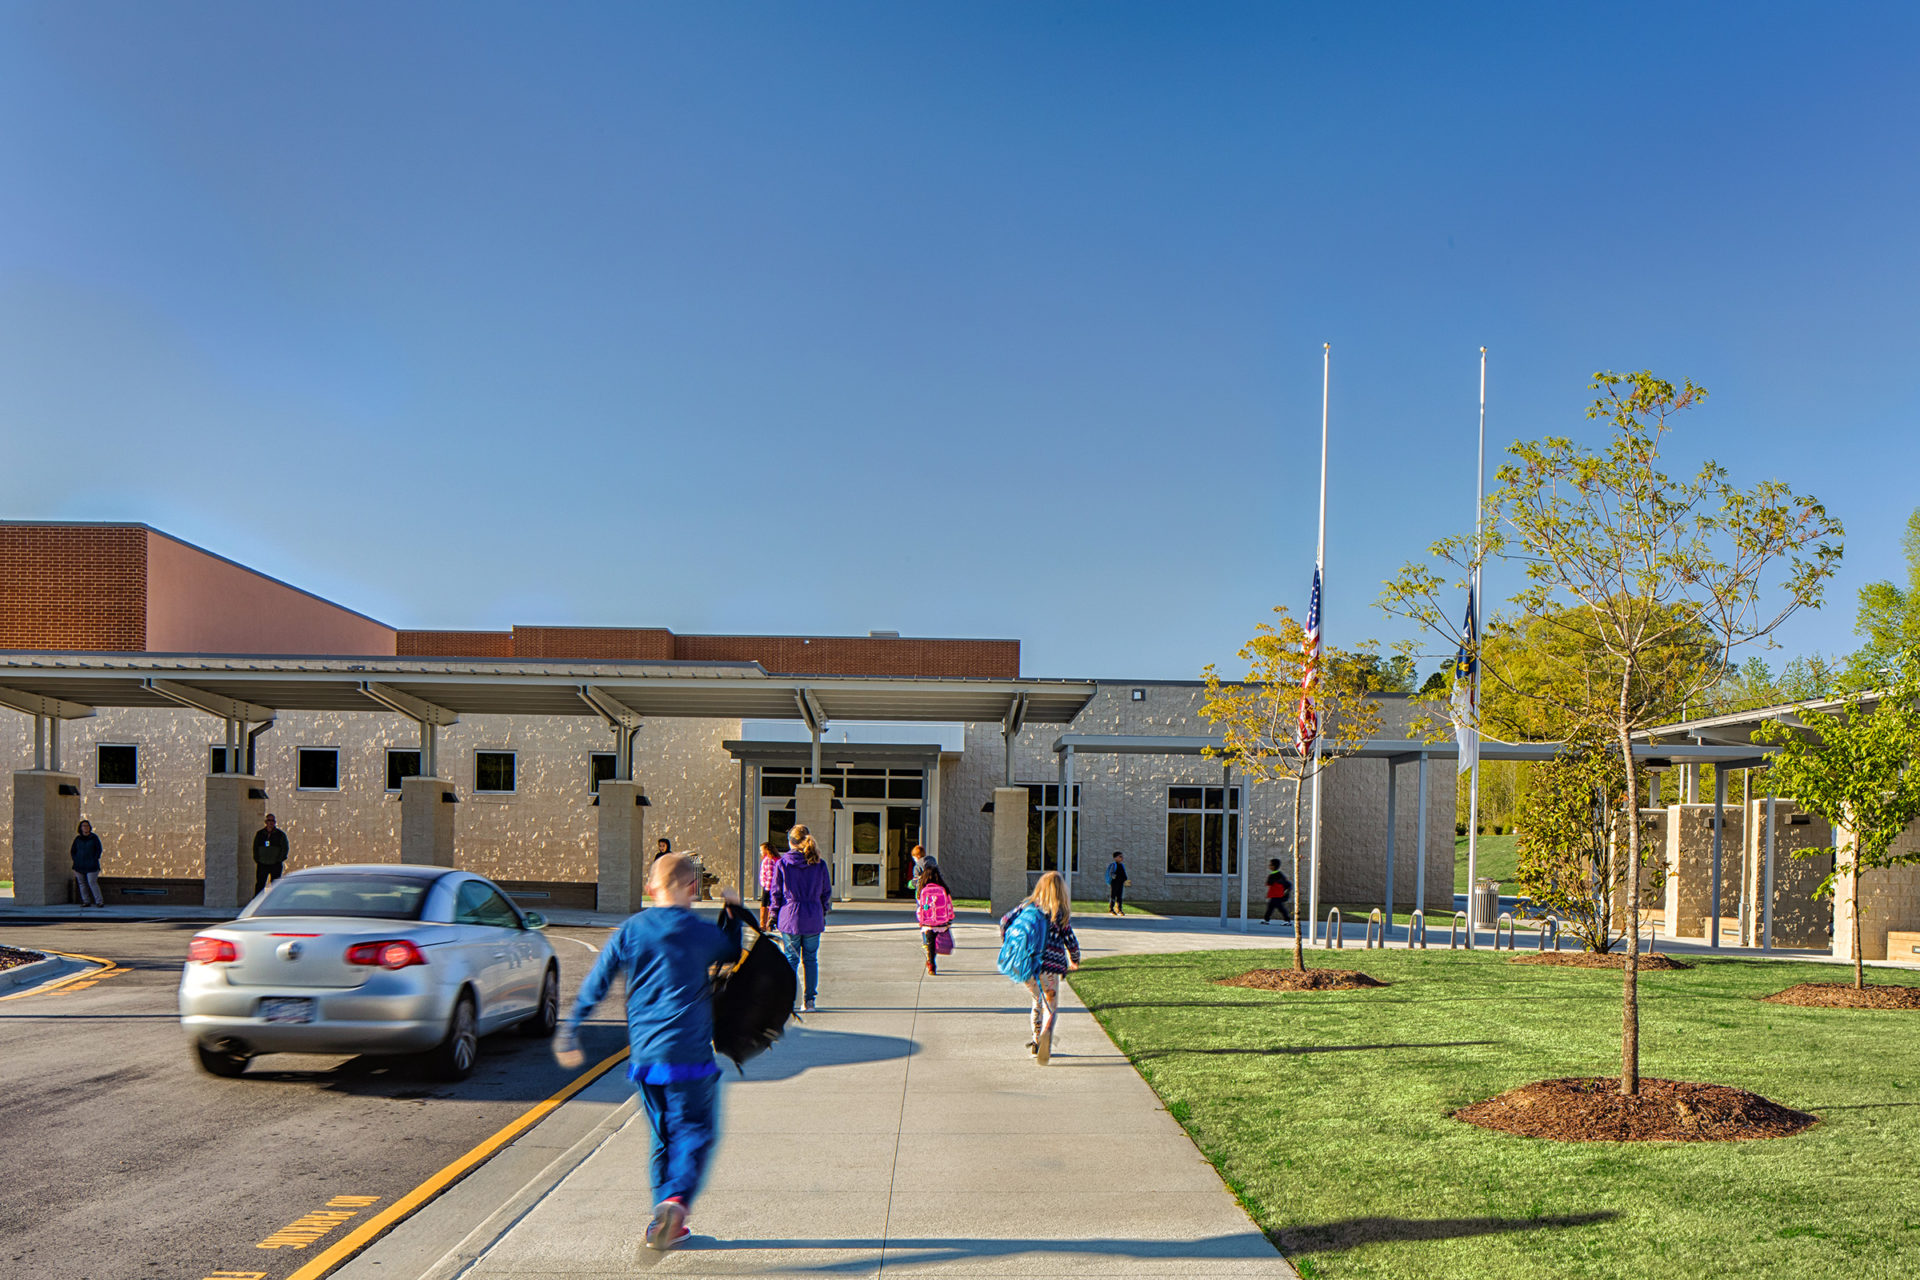 Bryan Road Elementary School in Garner, NC; Architect: Clark Nexsen